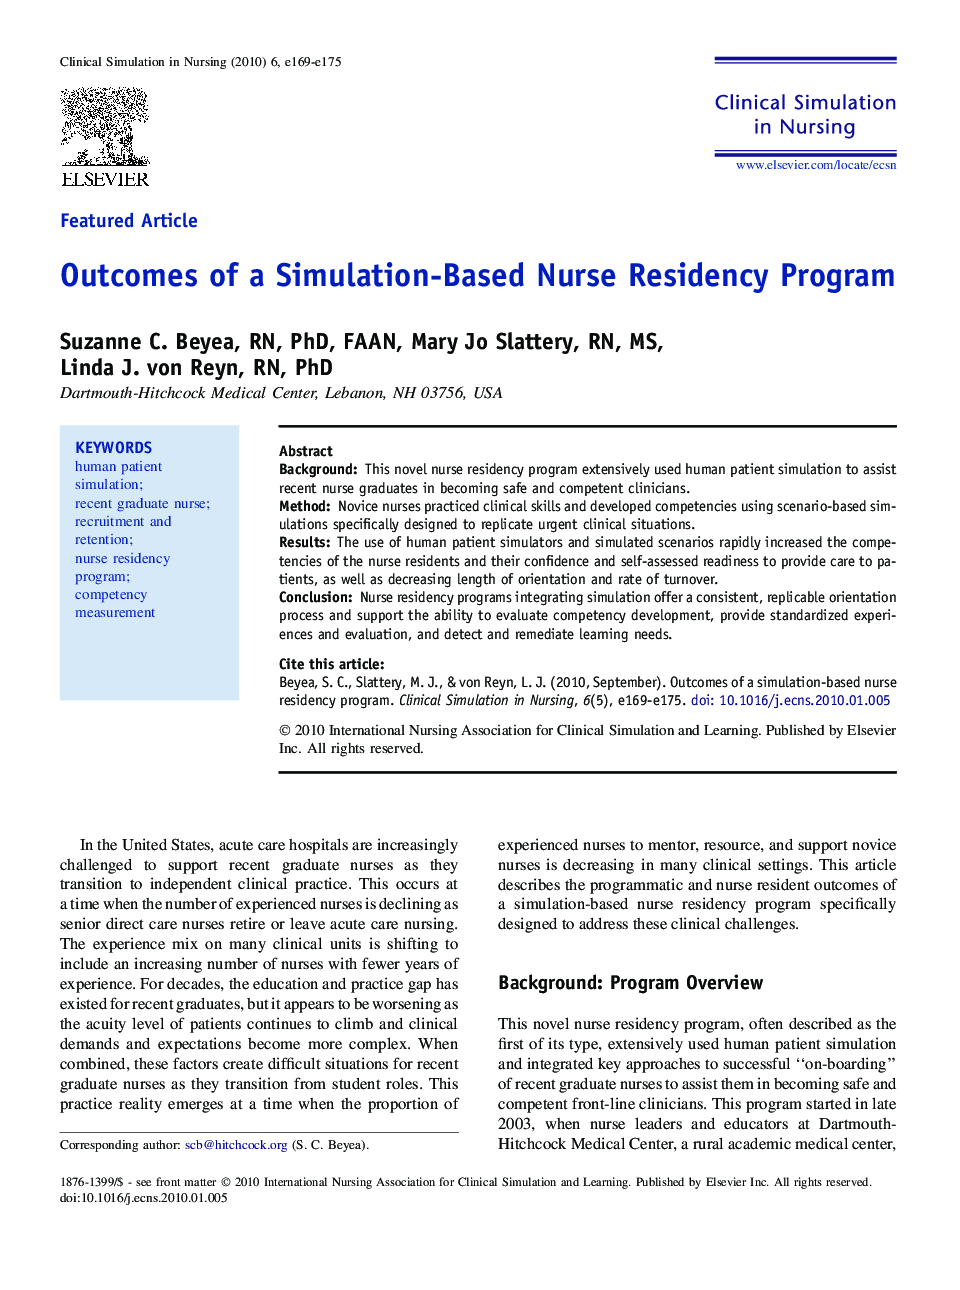 Outcomes of a Simulation-Based Nurse Residency Program 